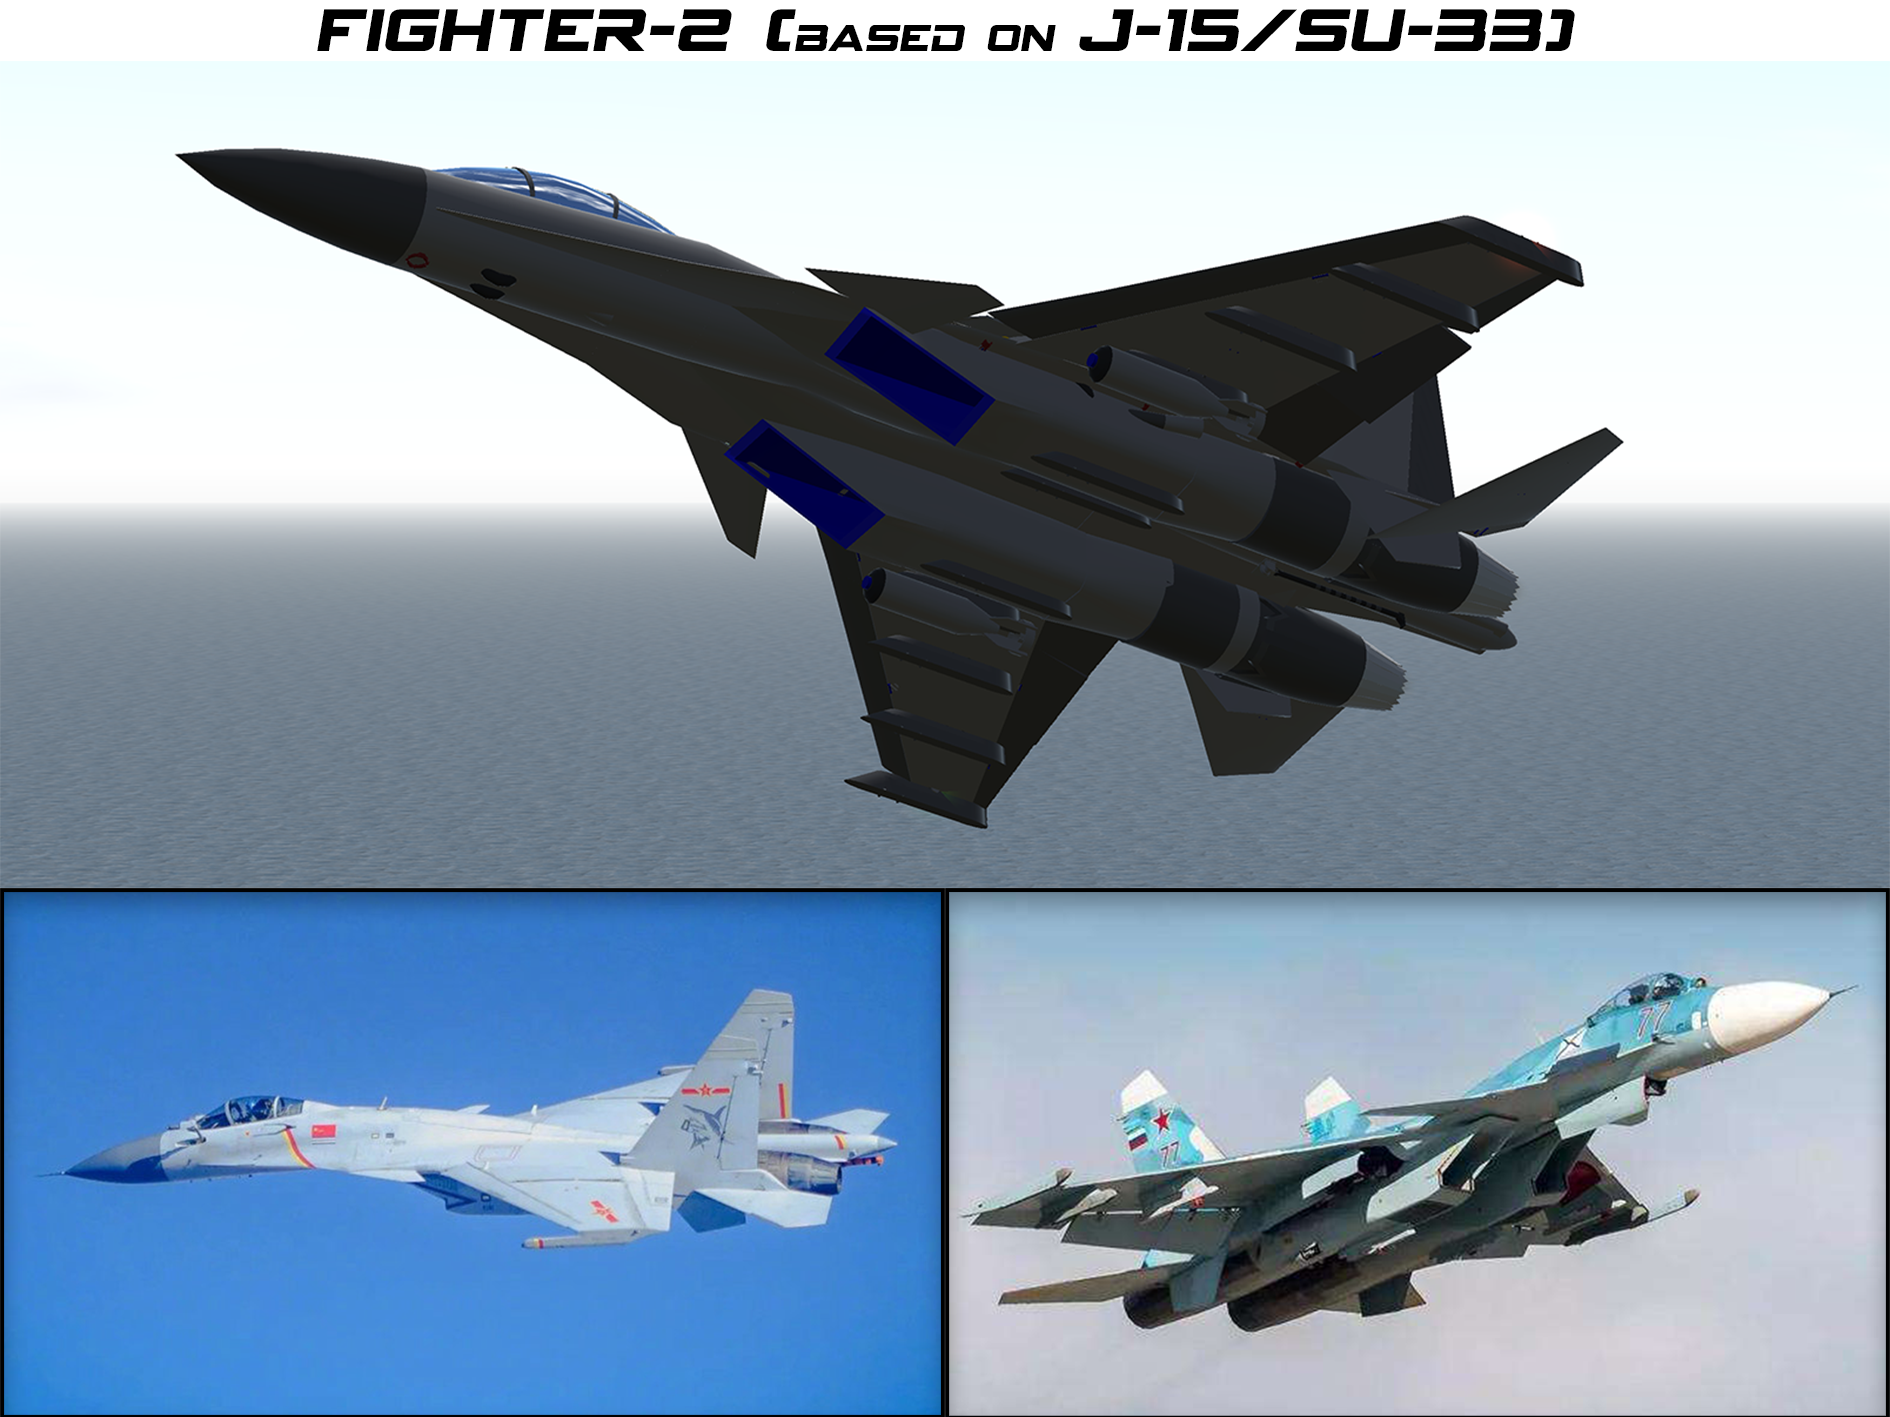 Fighter-2